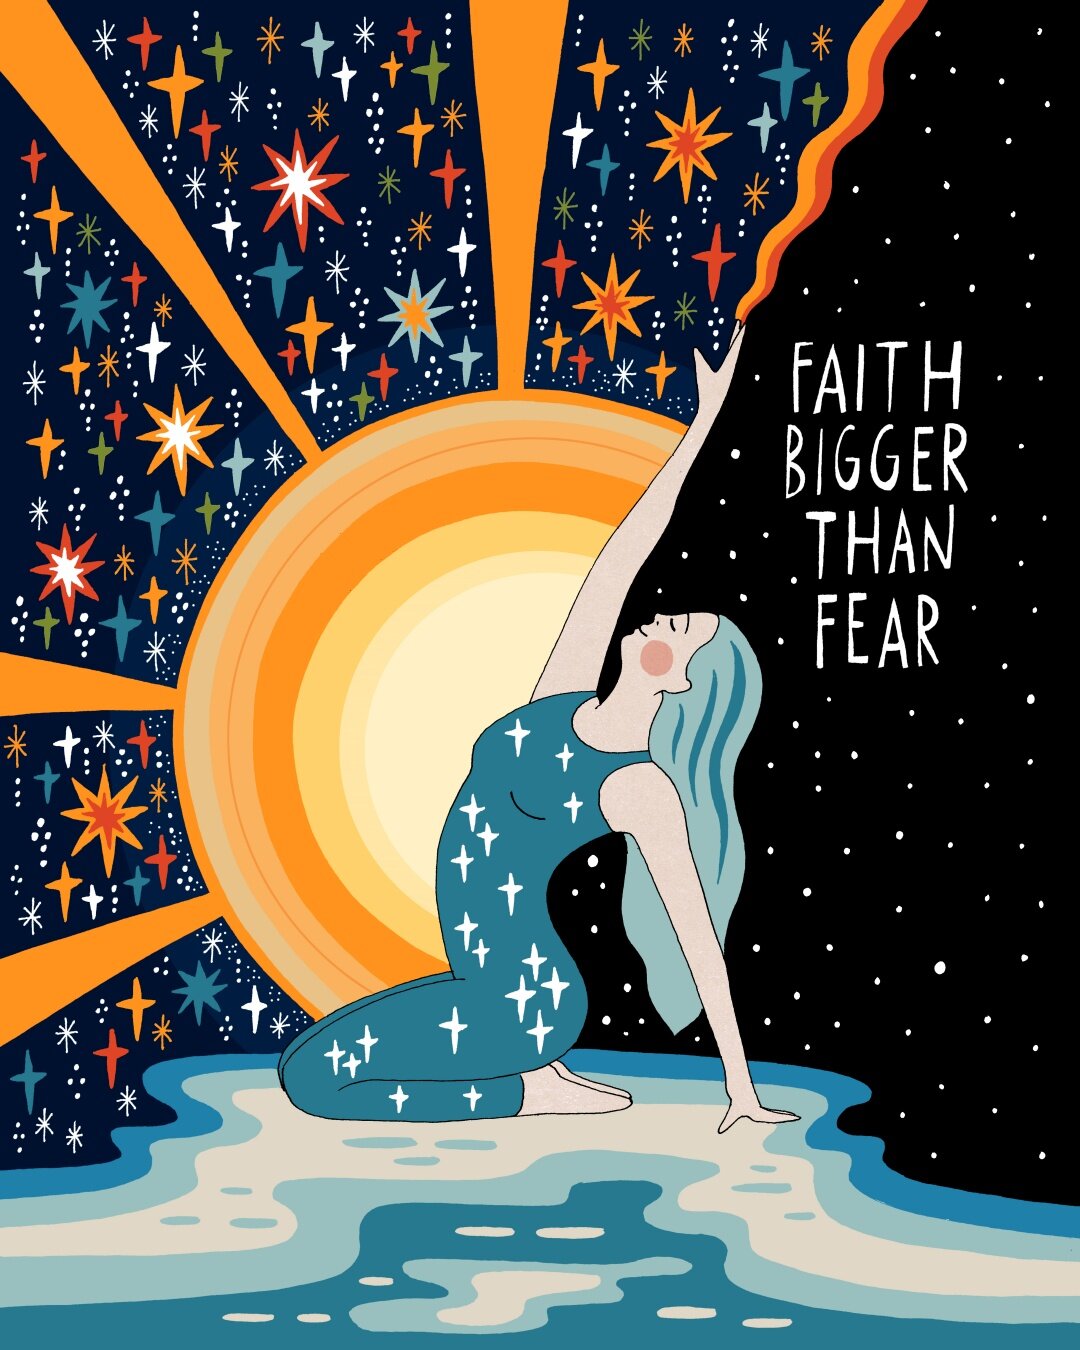 faith bigger than fear02.jpg